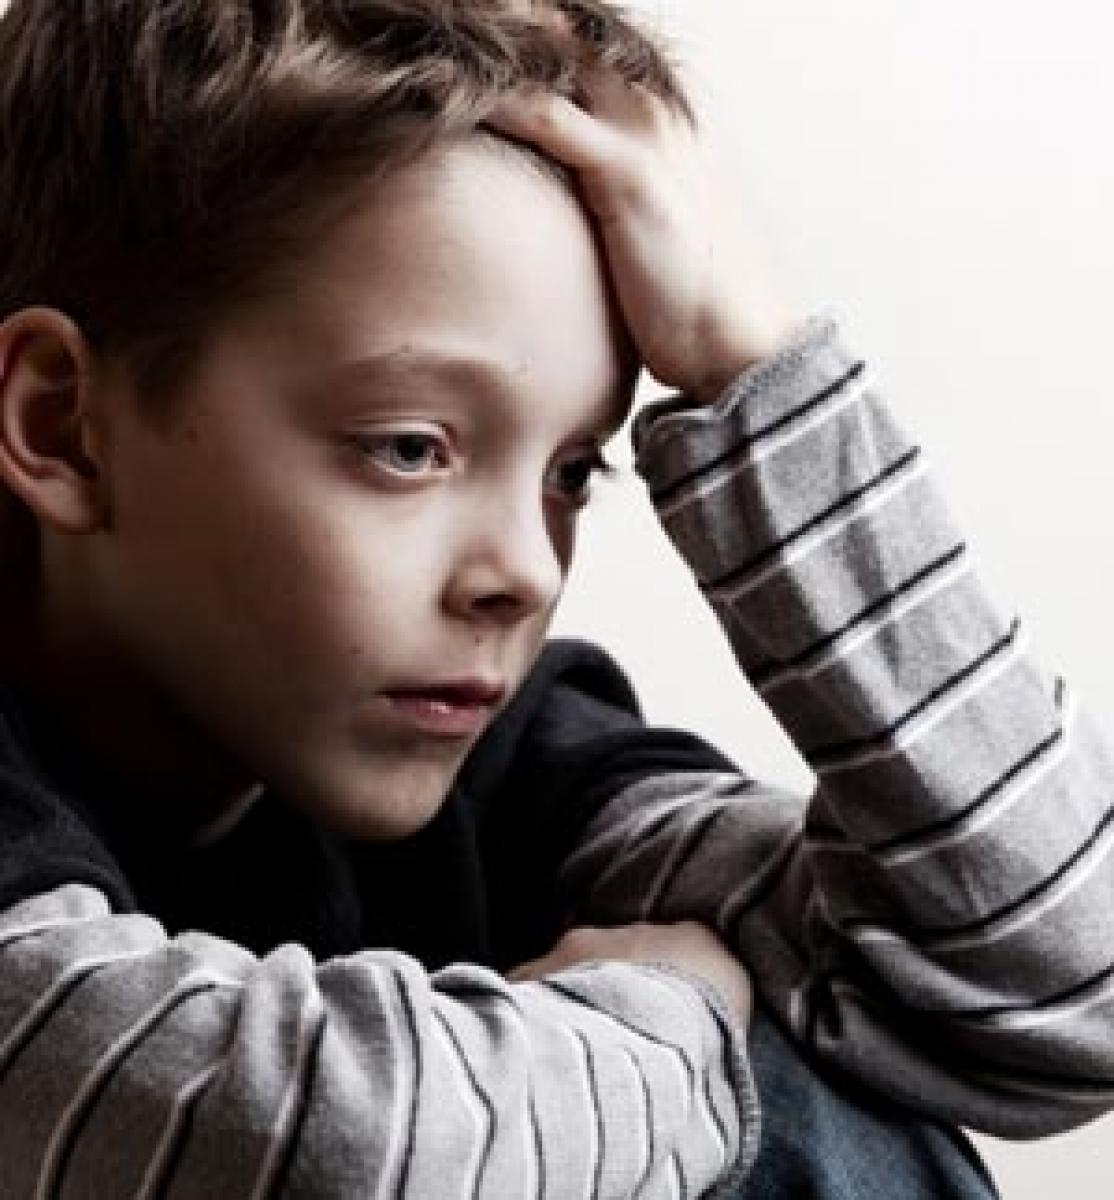 Most antidepressants fail to treat children, teenagers: Study